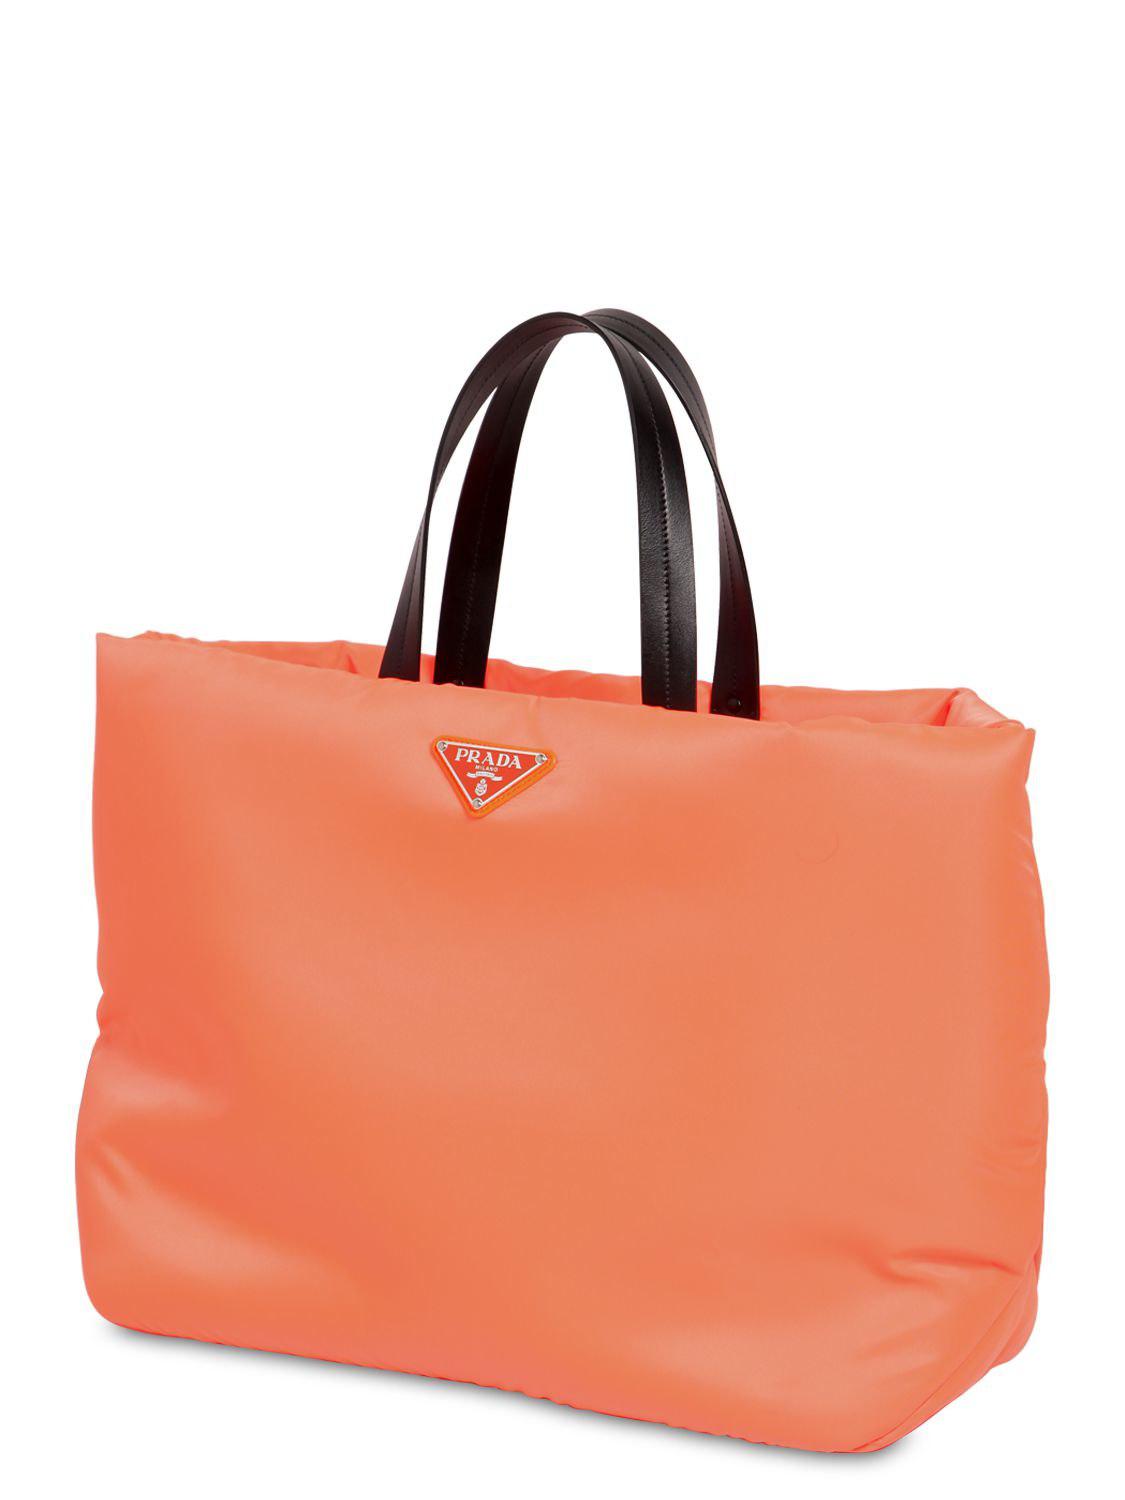 Prada Synthetic Puffer Nylon Tote Bag in Neon Orange (Orange) - Lyst